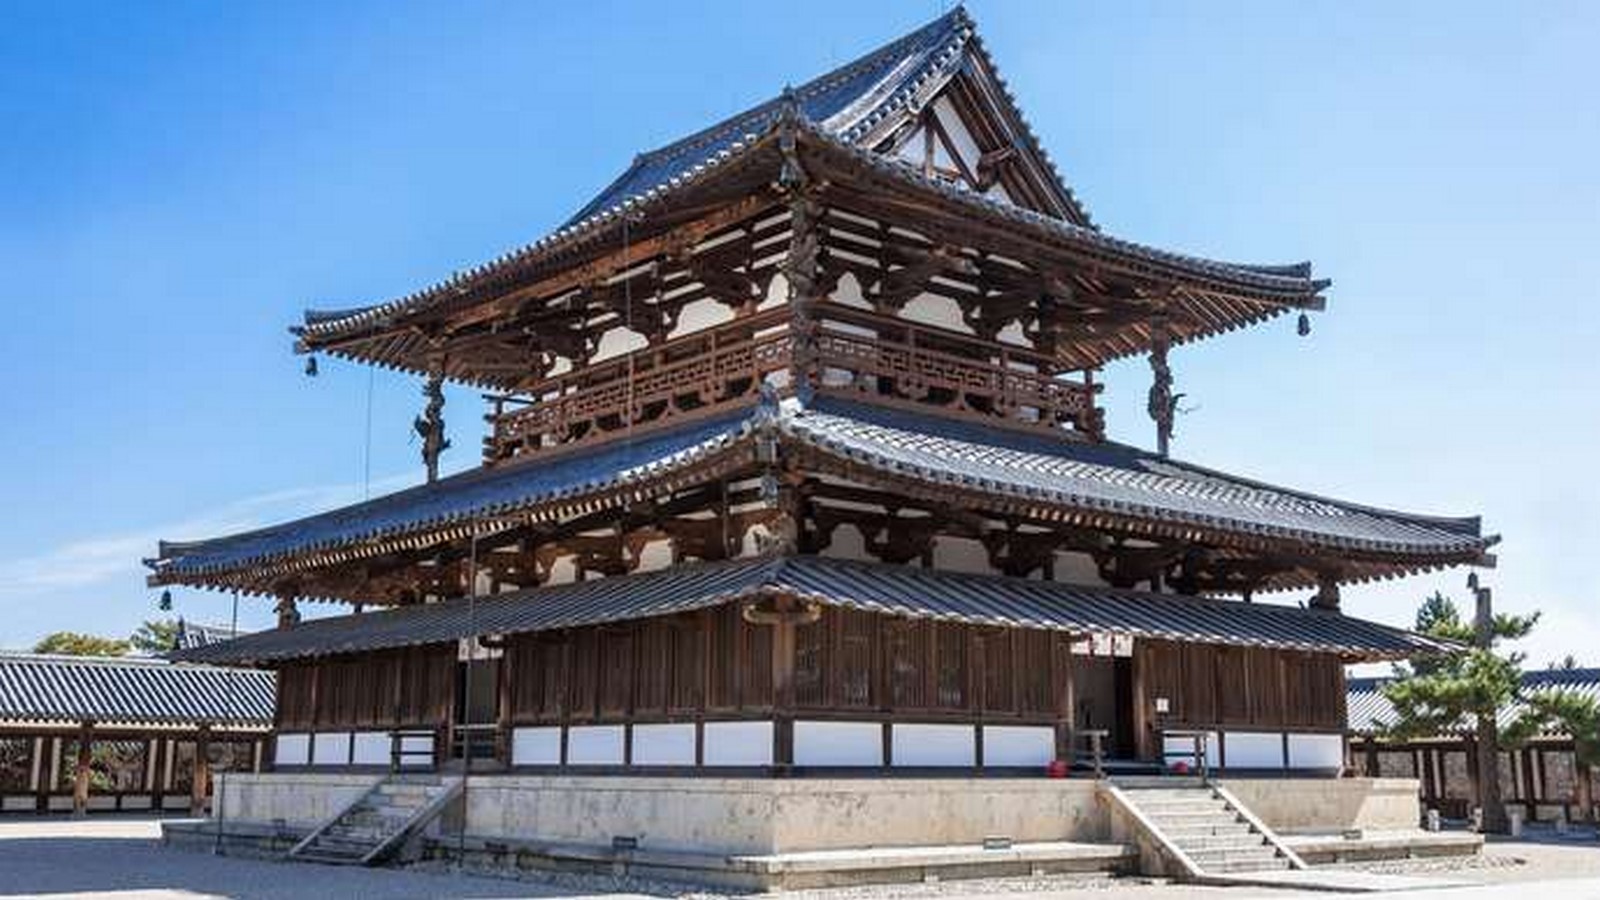  10 Elements of Japanese Architecture - Sheet14